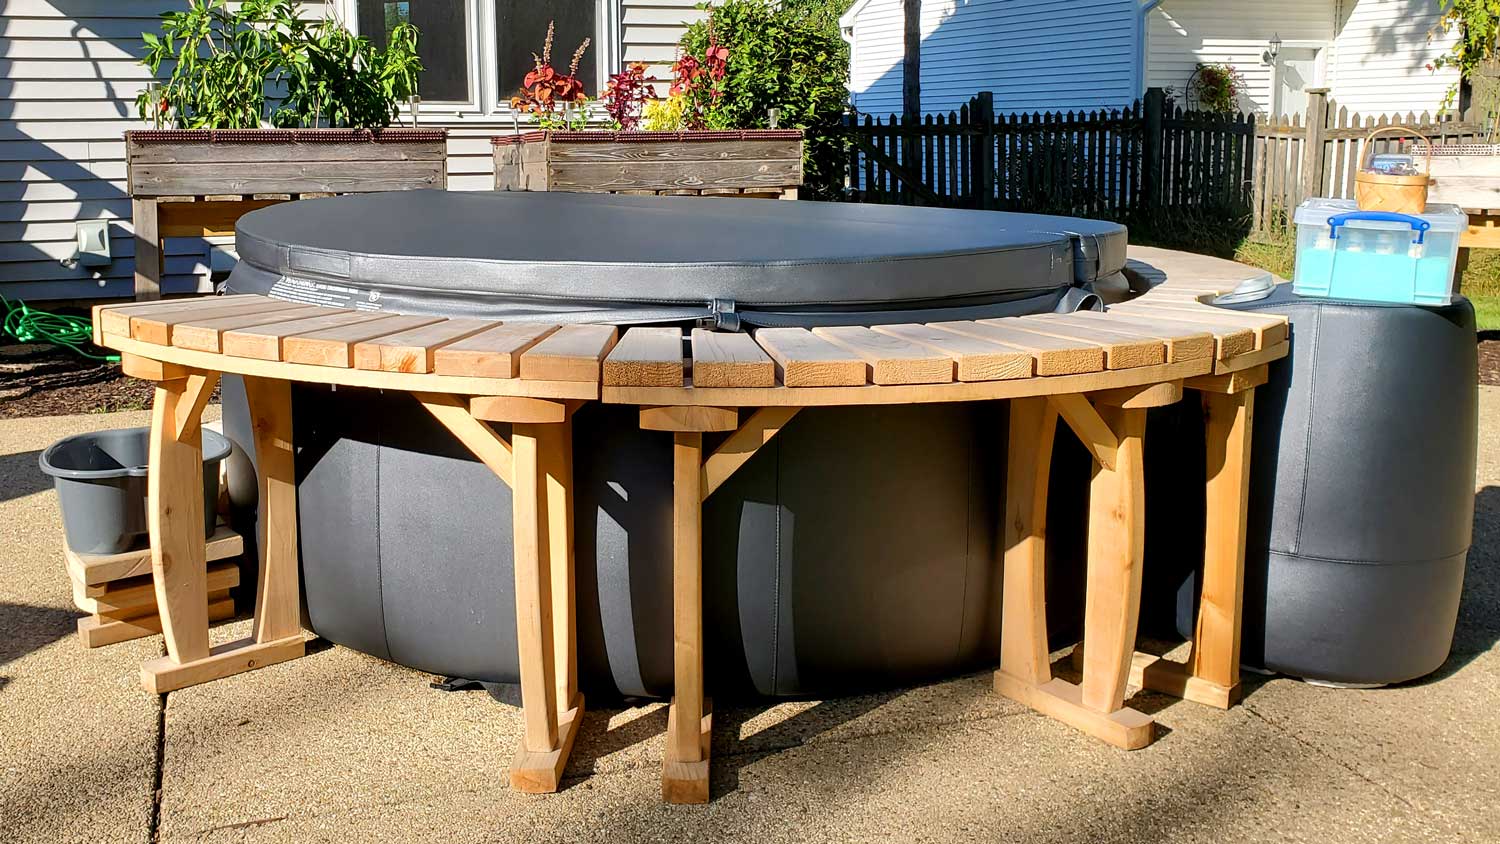 CHILLnTUB hot tub installation with wooden surround.